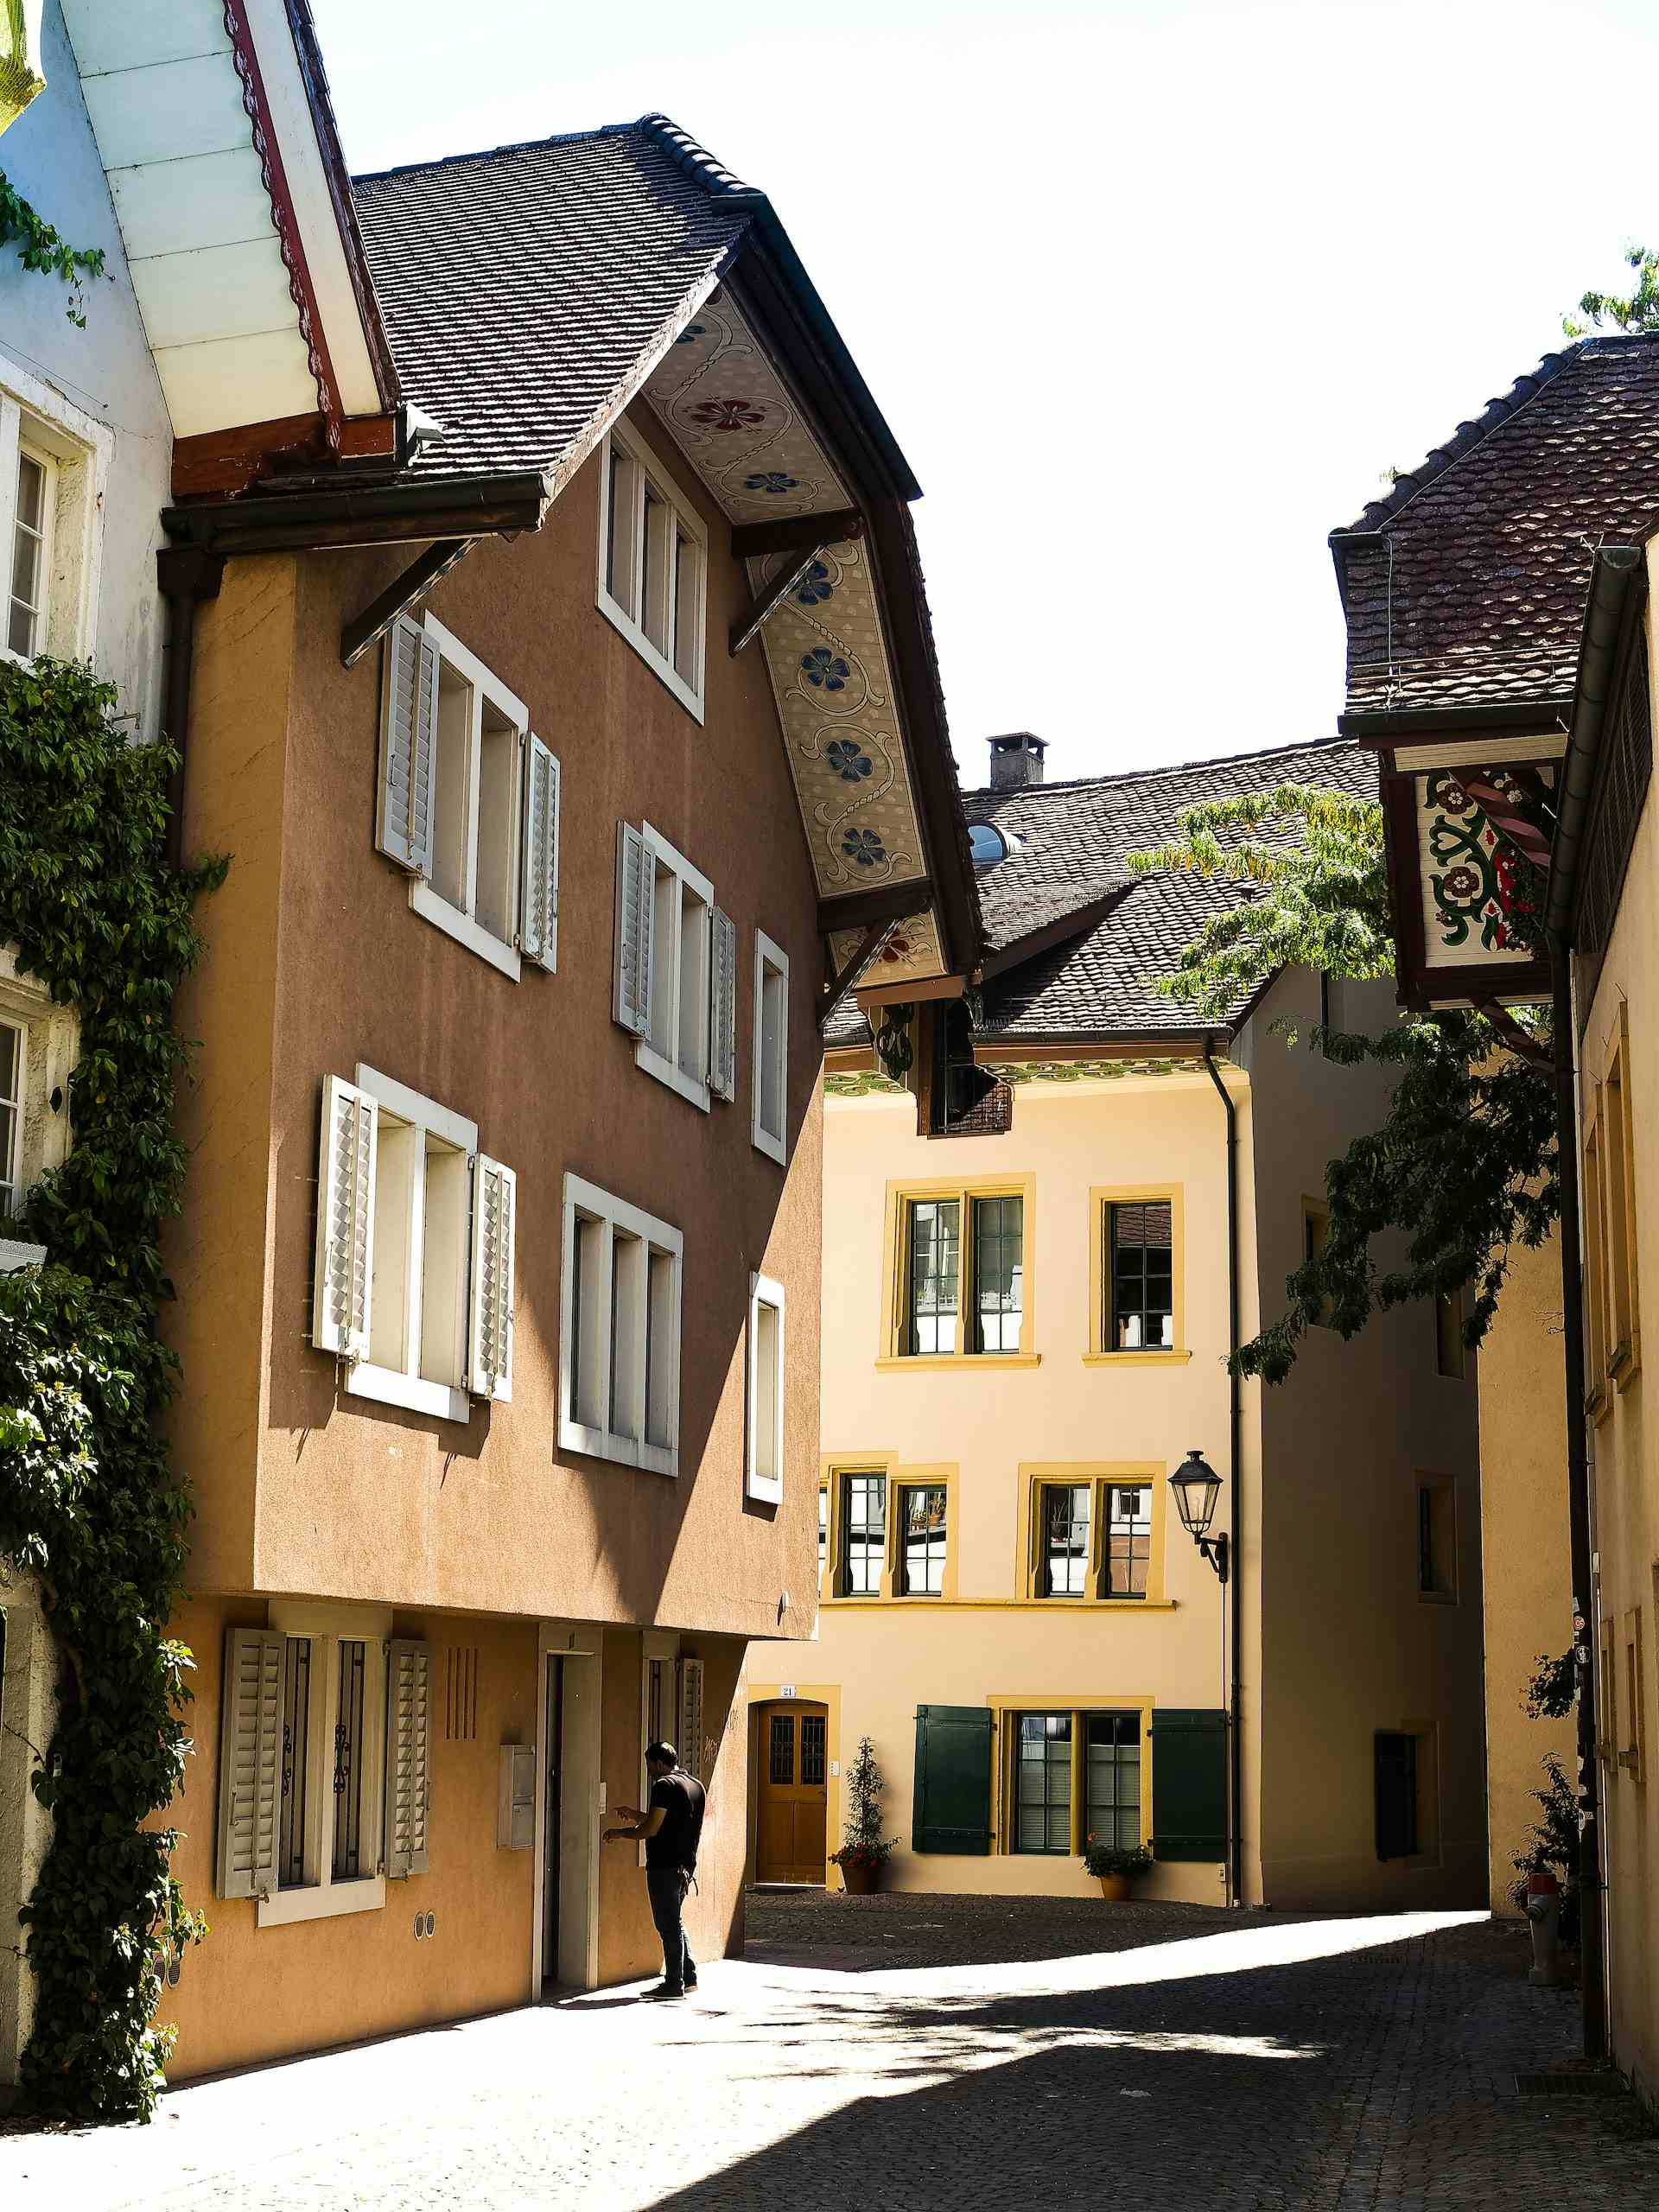 Steibruch-Hof, producer in Brunegg canton of Aargau in Switzerland